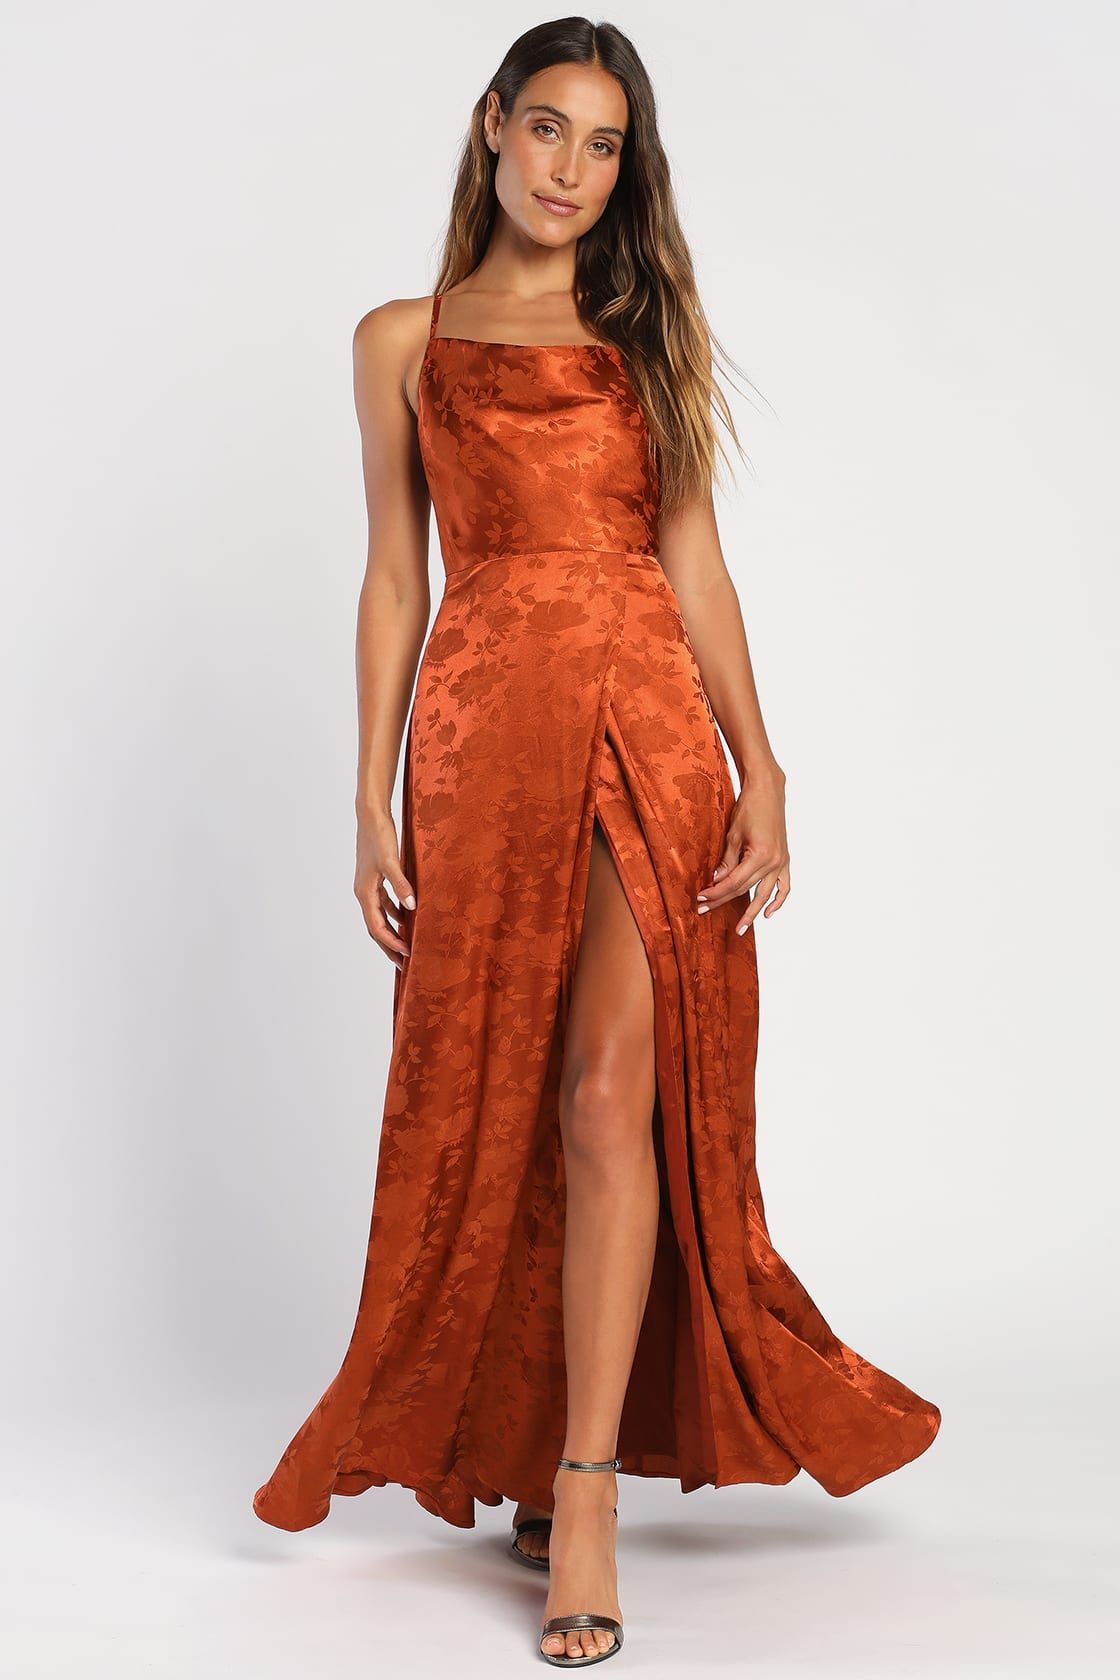 Simply Dreamy Rust Orange Satin Floral Jacquard Maxi Dress | Lulus (US)